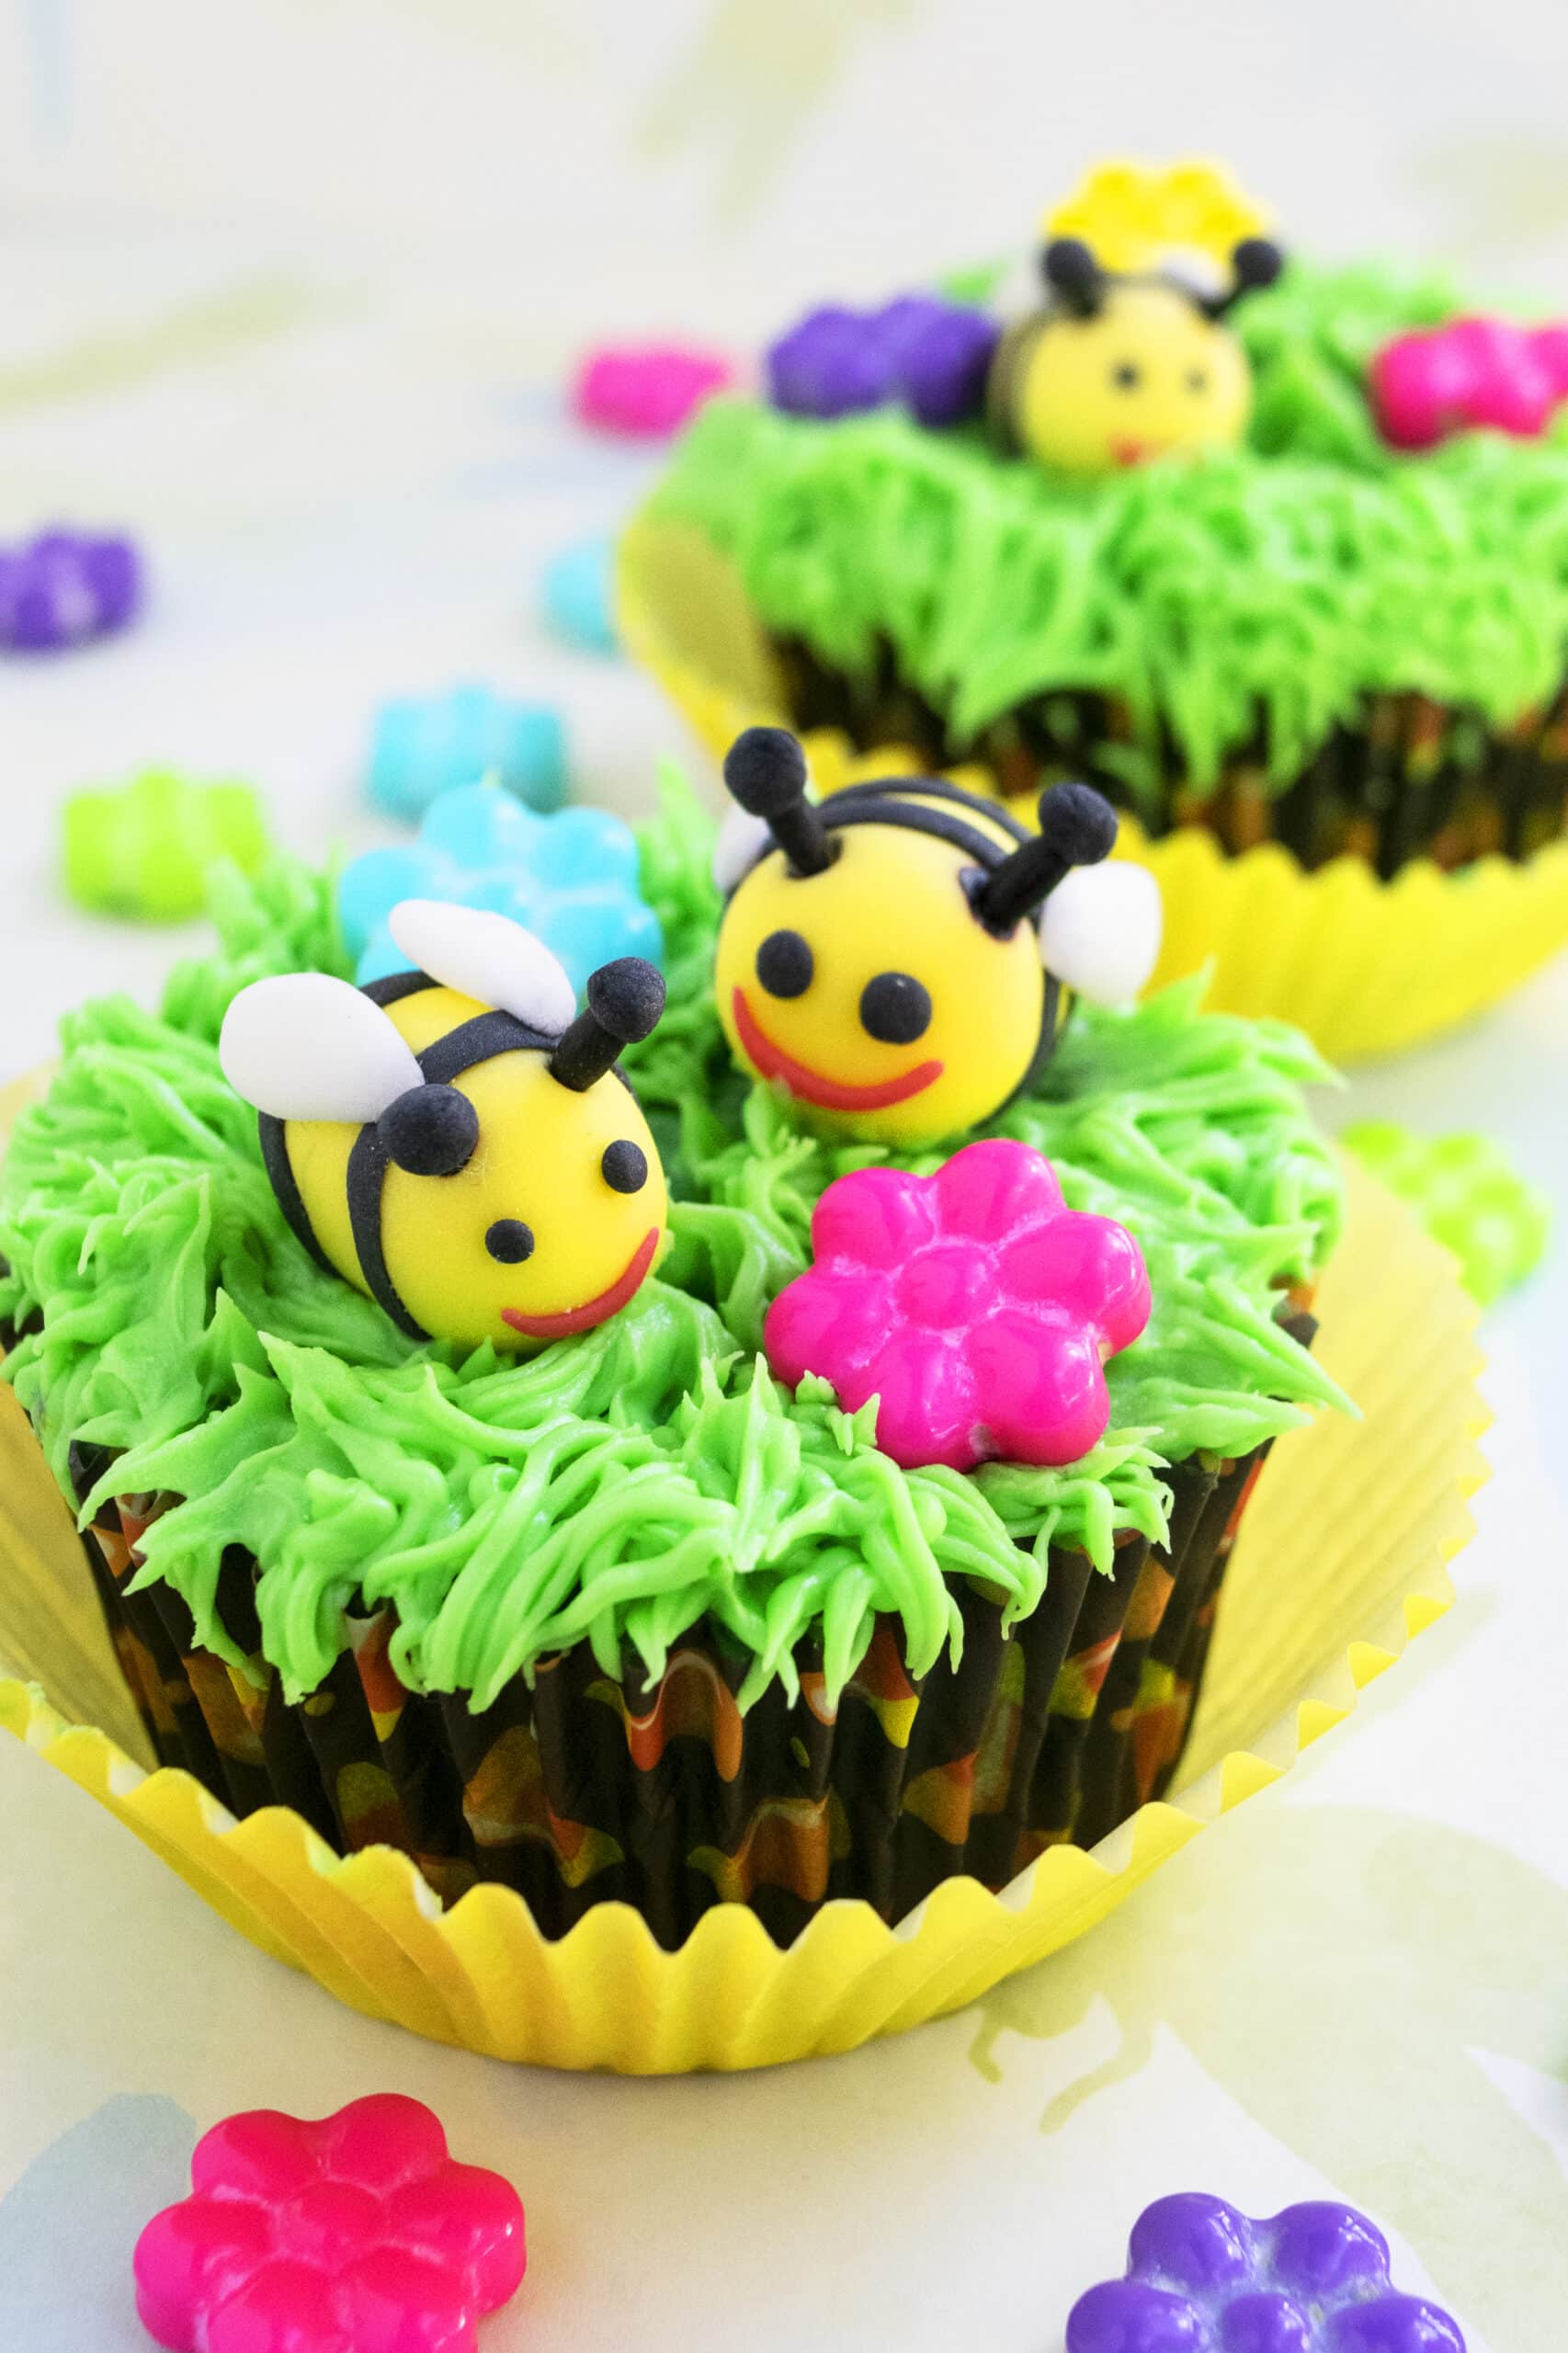 Bees Cakes Decorations- Bumble Bee Shaped Edible Hard Sugar